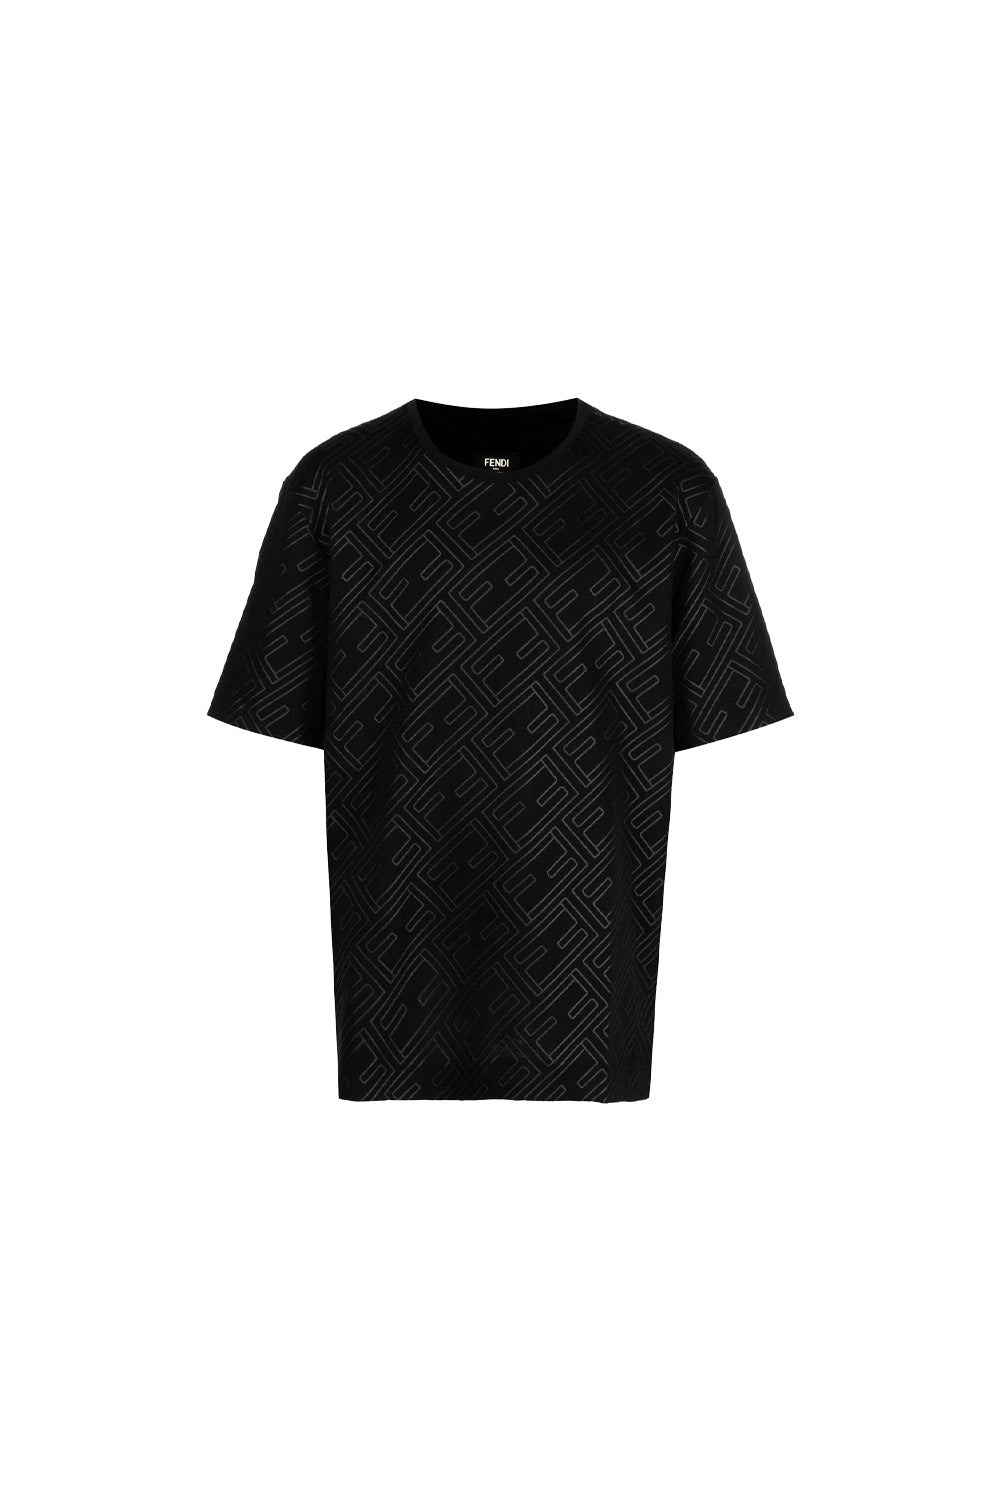 Fendi Black jersey T-shirt